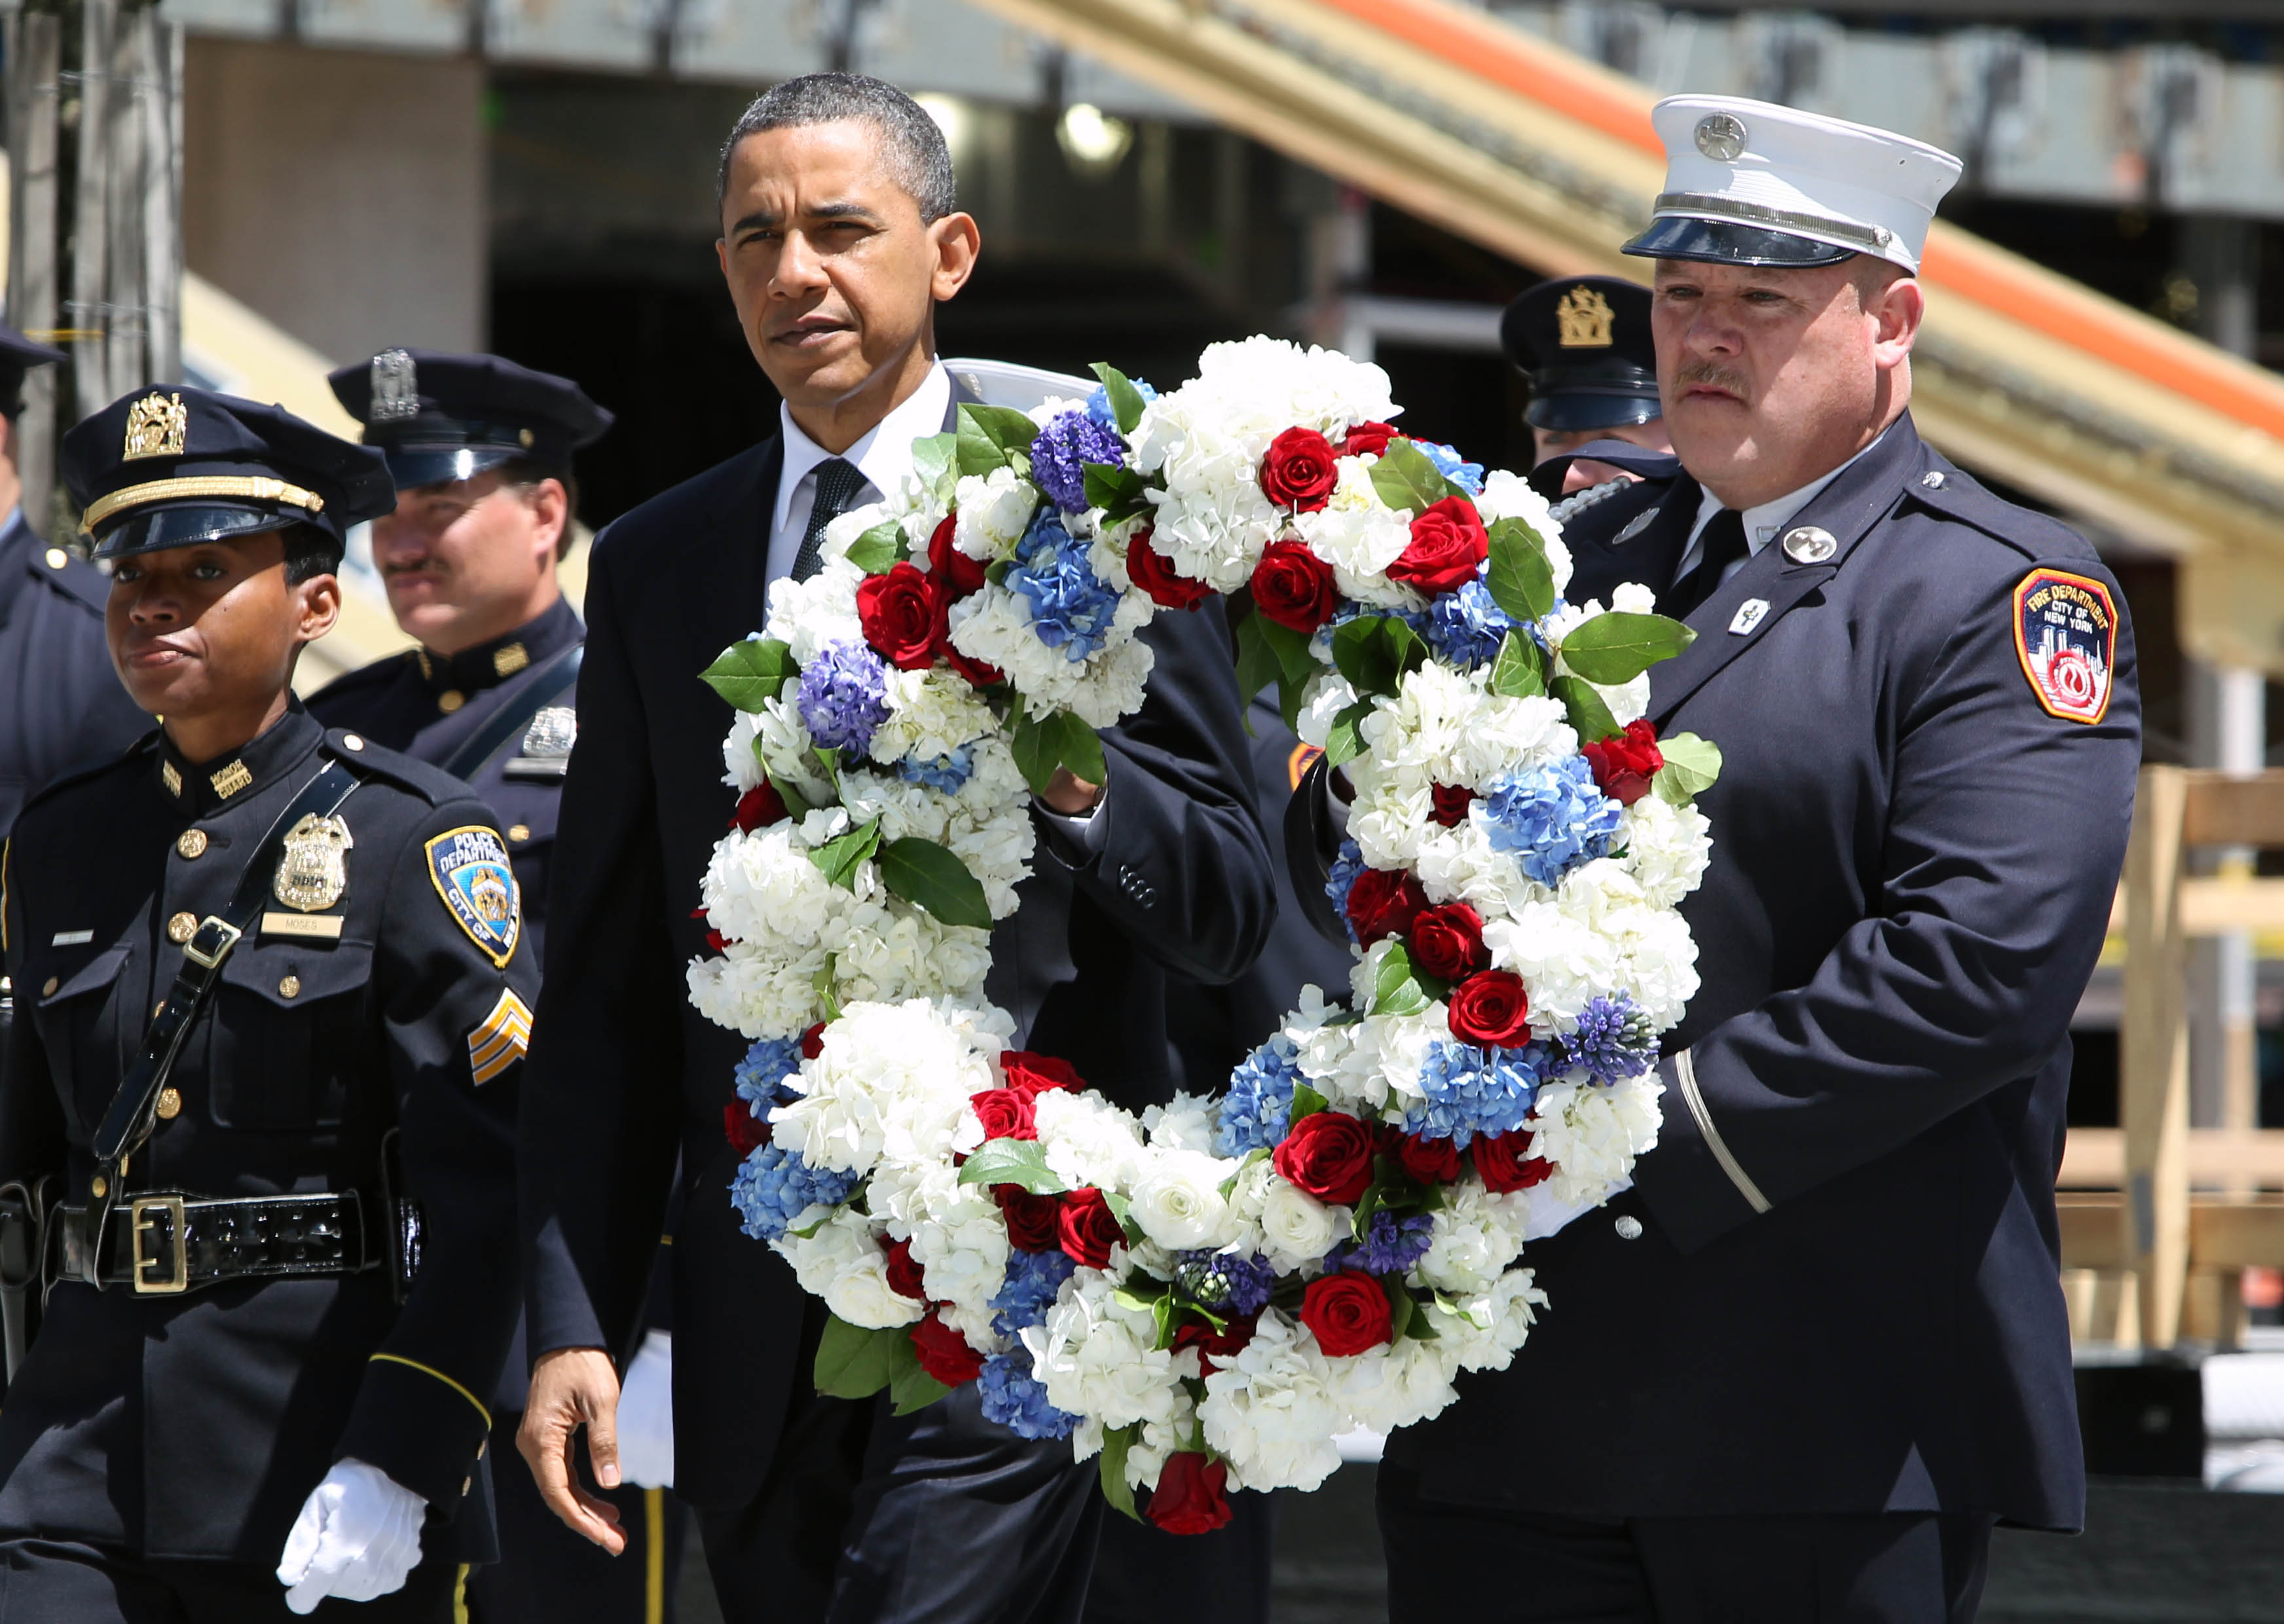 Obama made an emotional return to Ground Zero